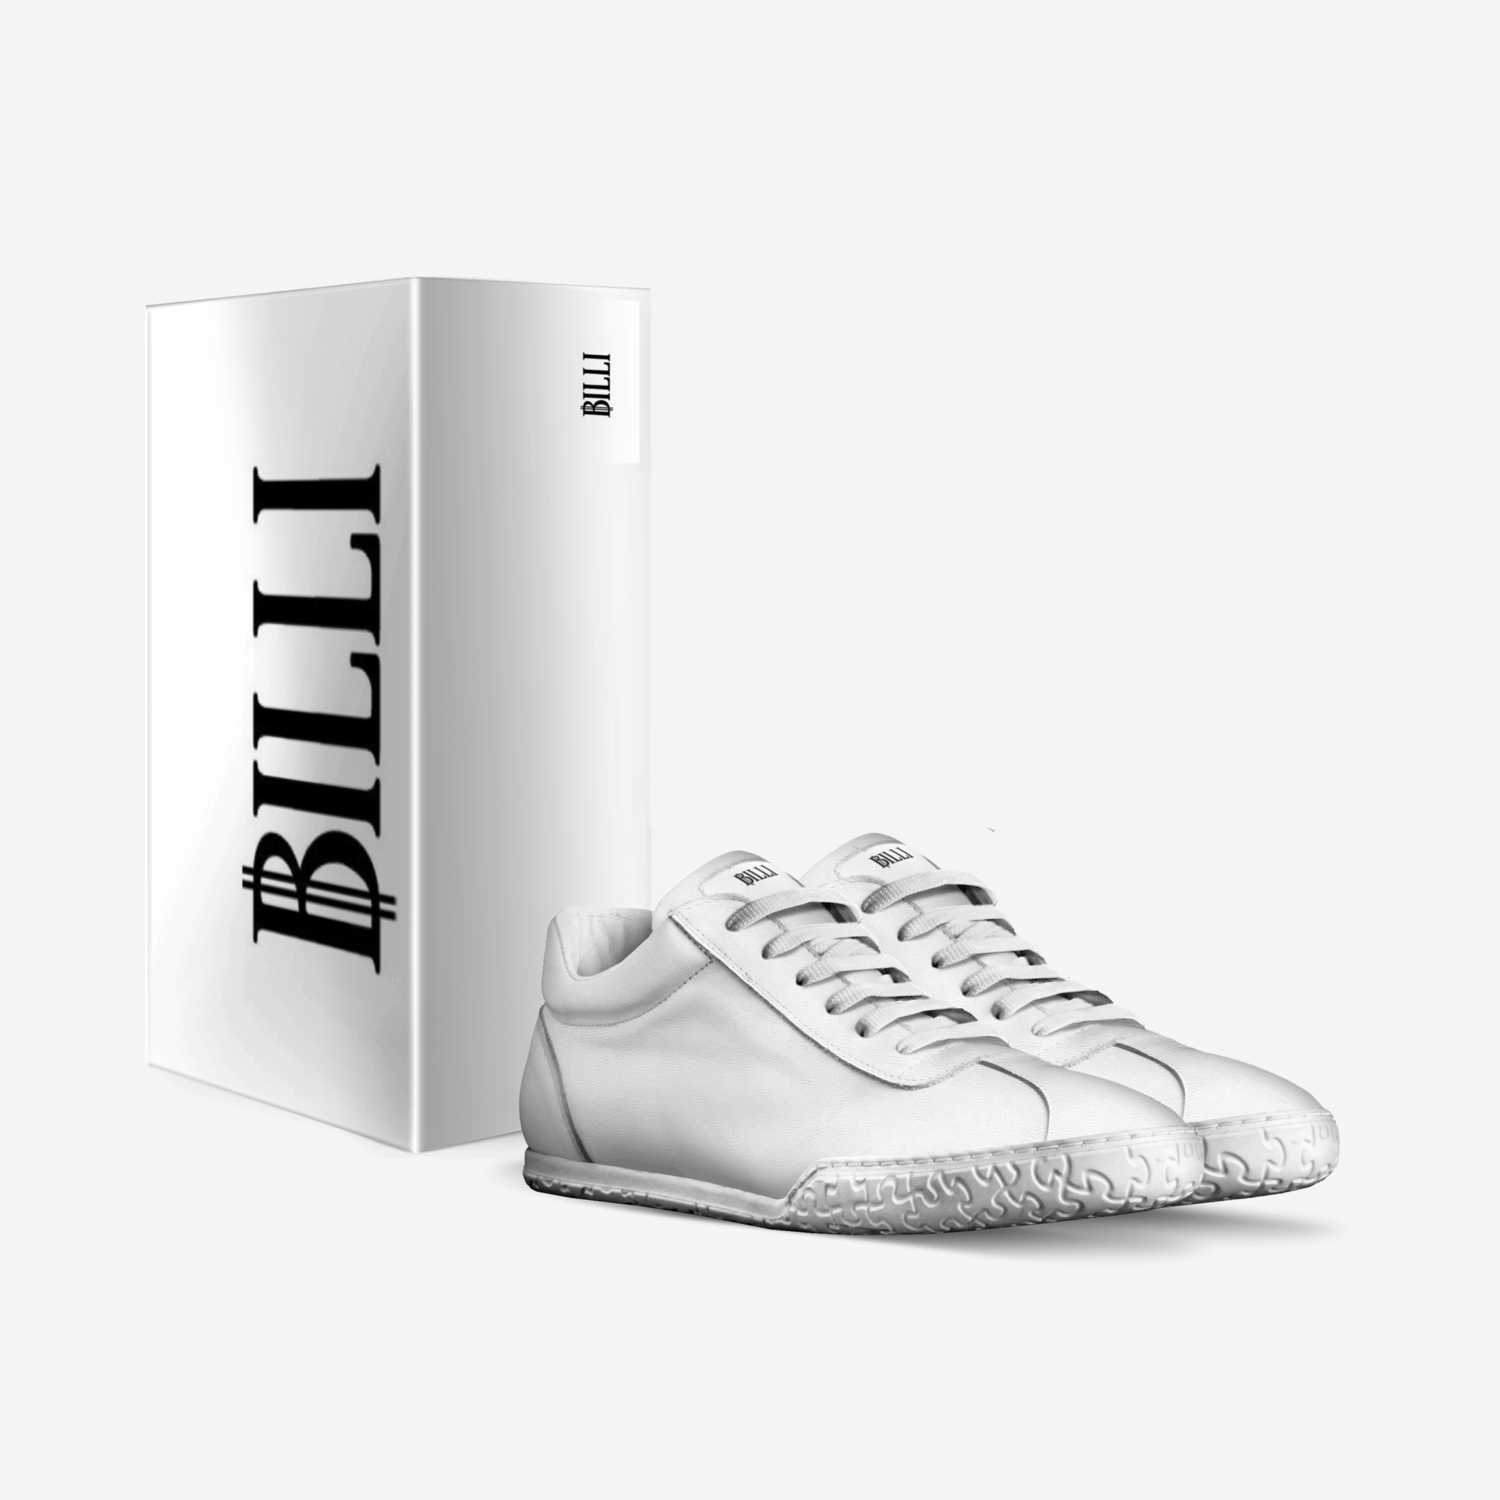 BILLI'$. custom made in Italy shoes by Zay Billi | Box view